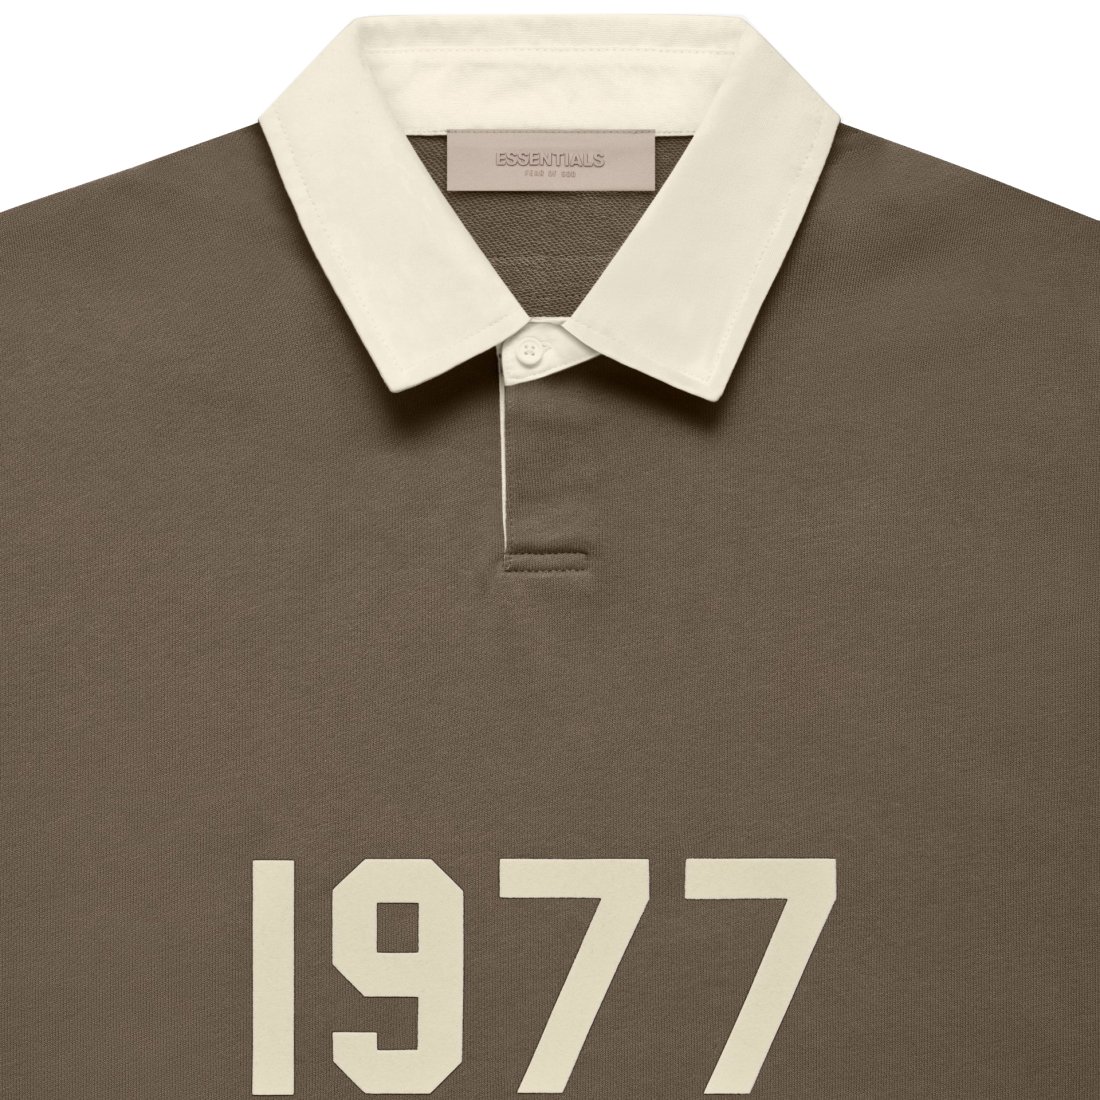 FOG ESSENTIALS 1977 ラガーシャツ ラグビーシャツ ポロシャツ 